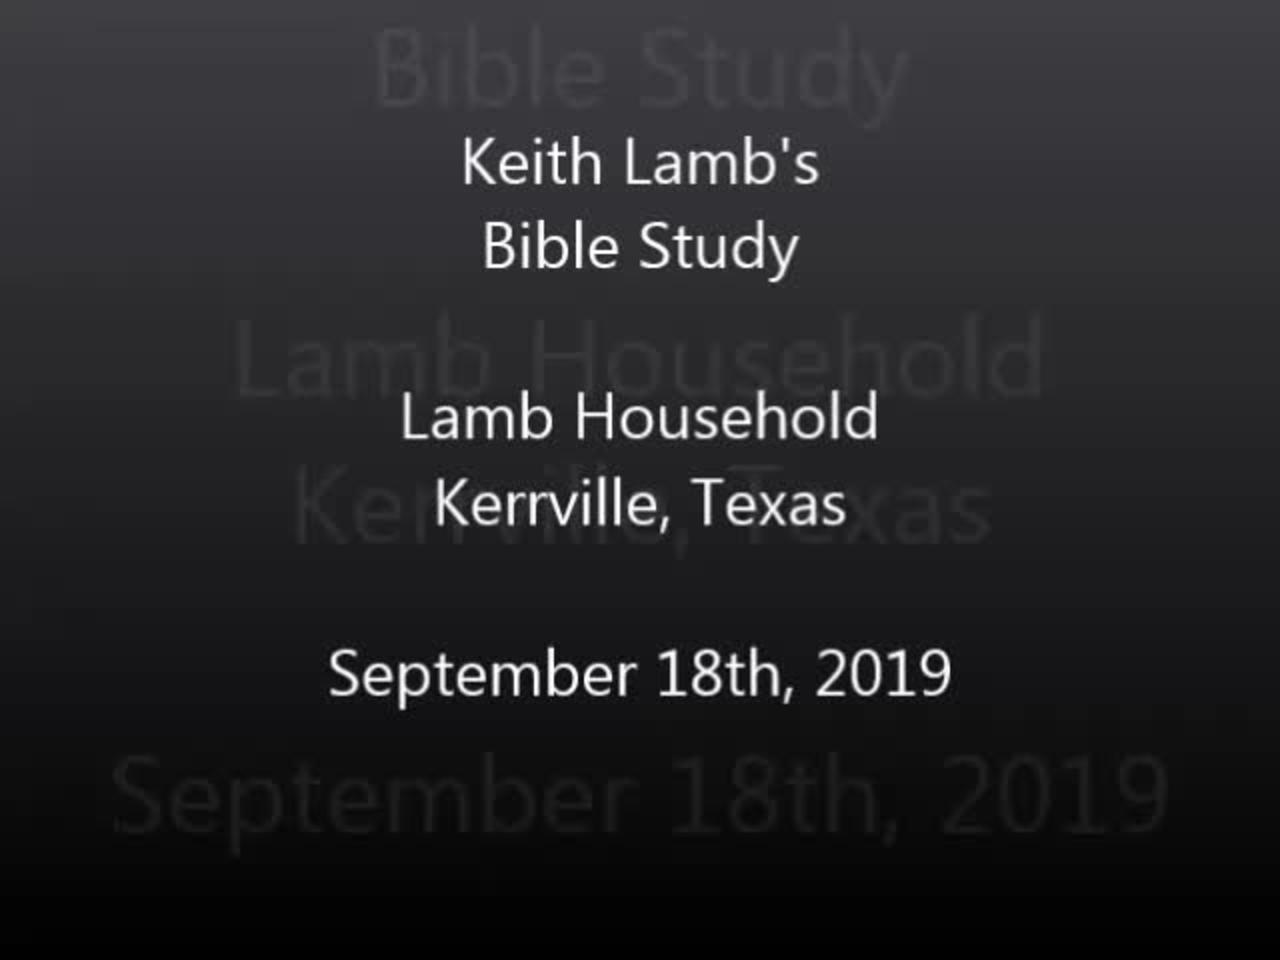 Bible Study at the Lamb's part 2